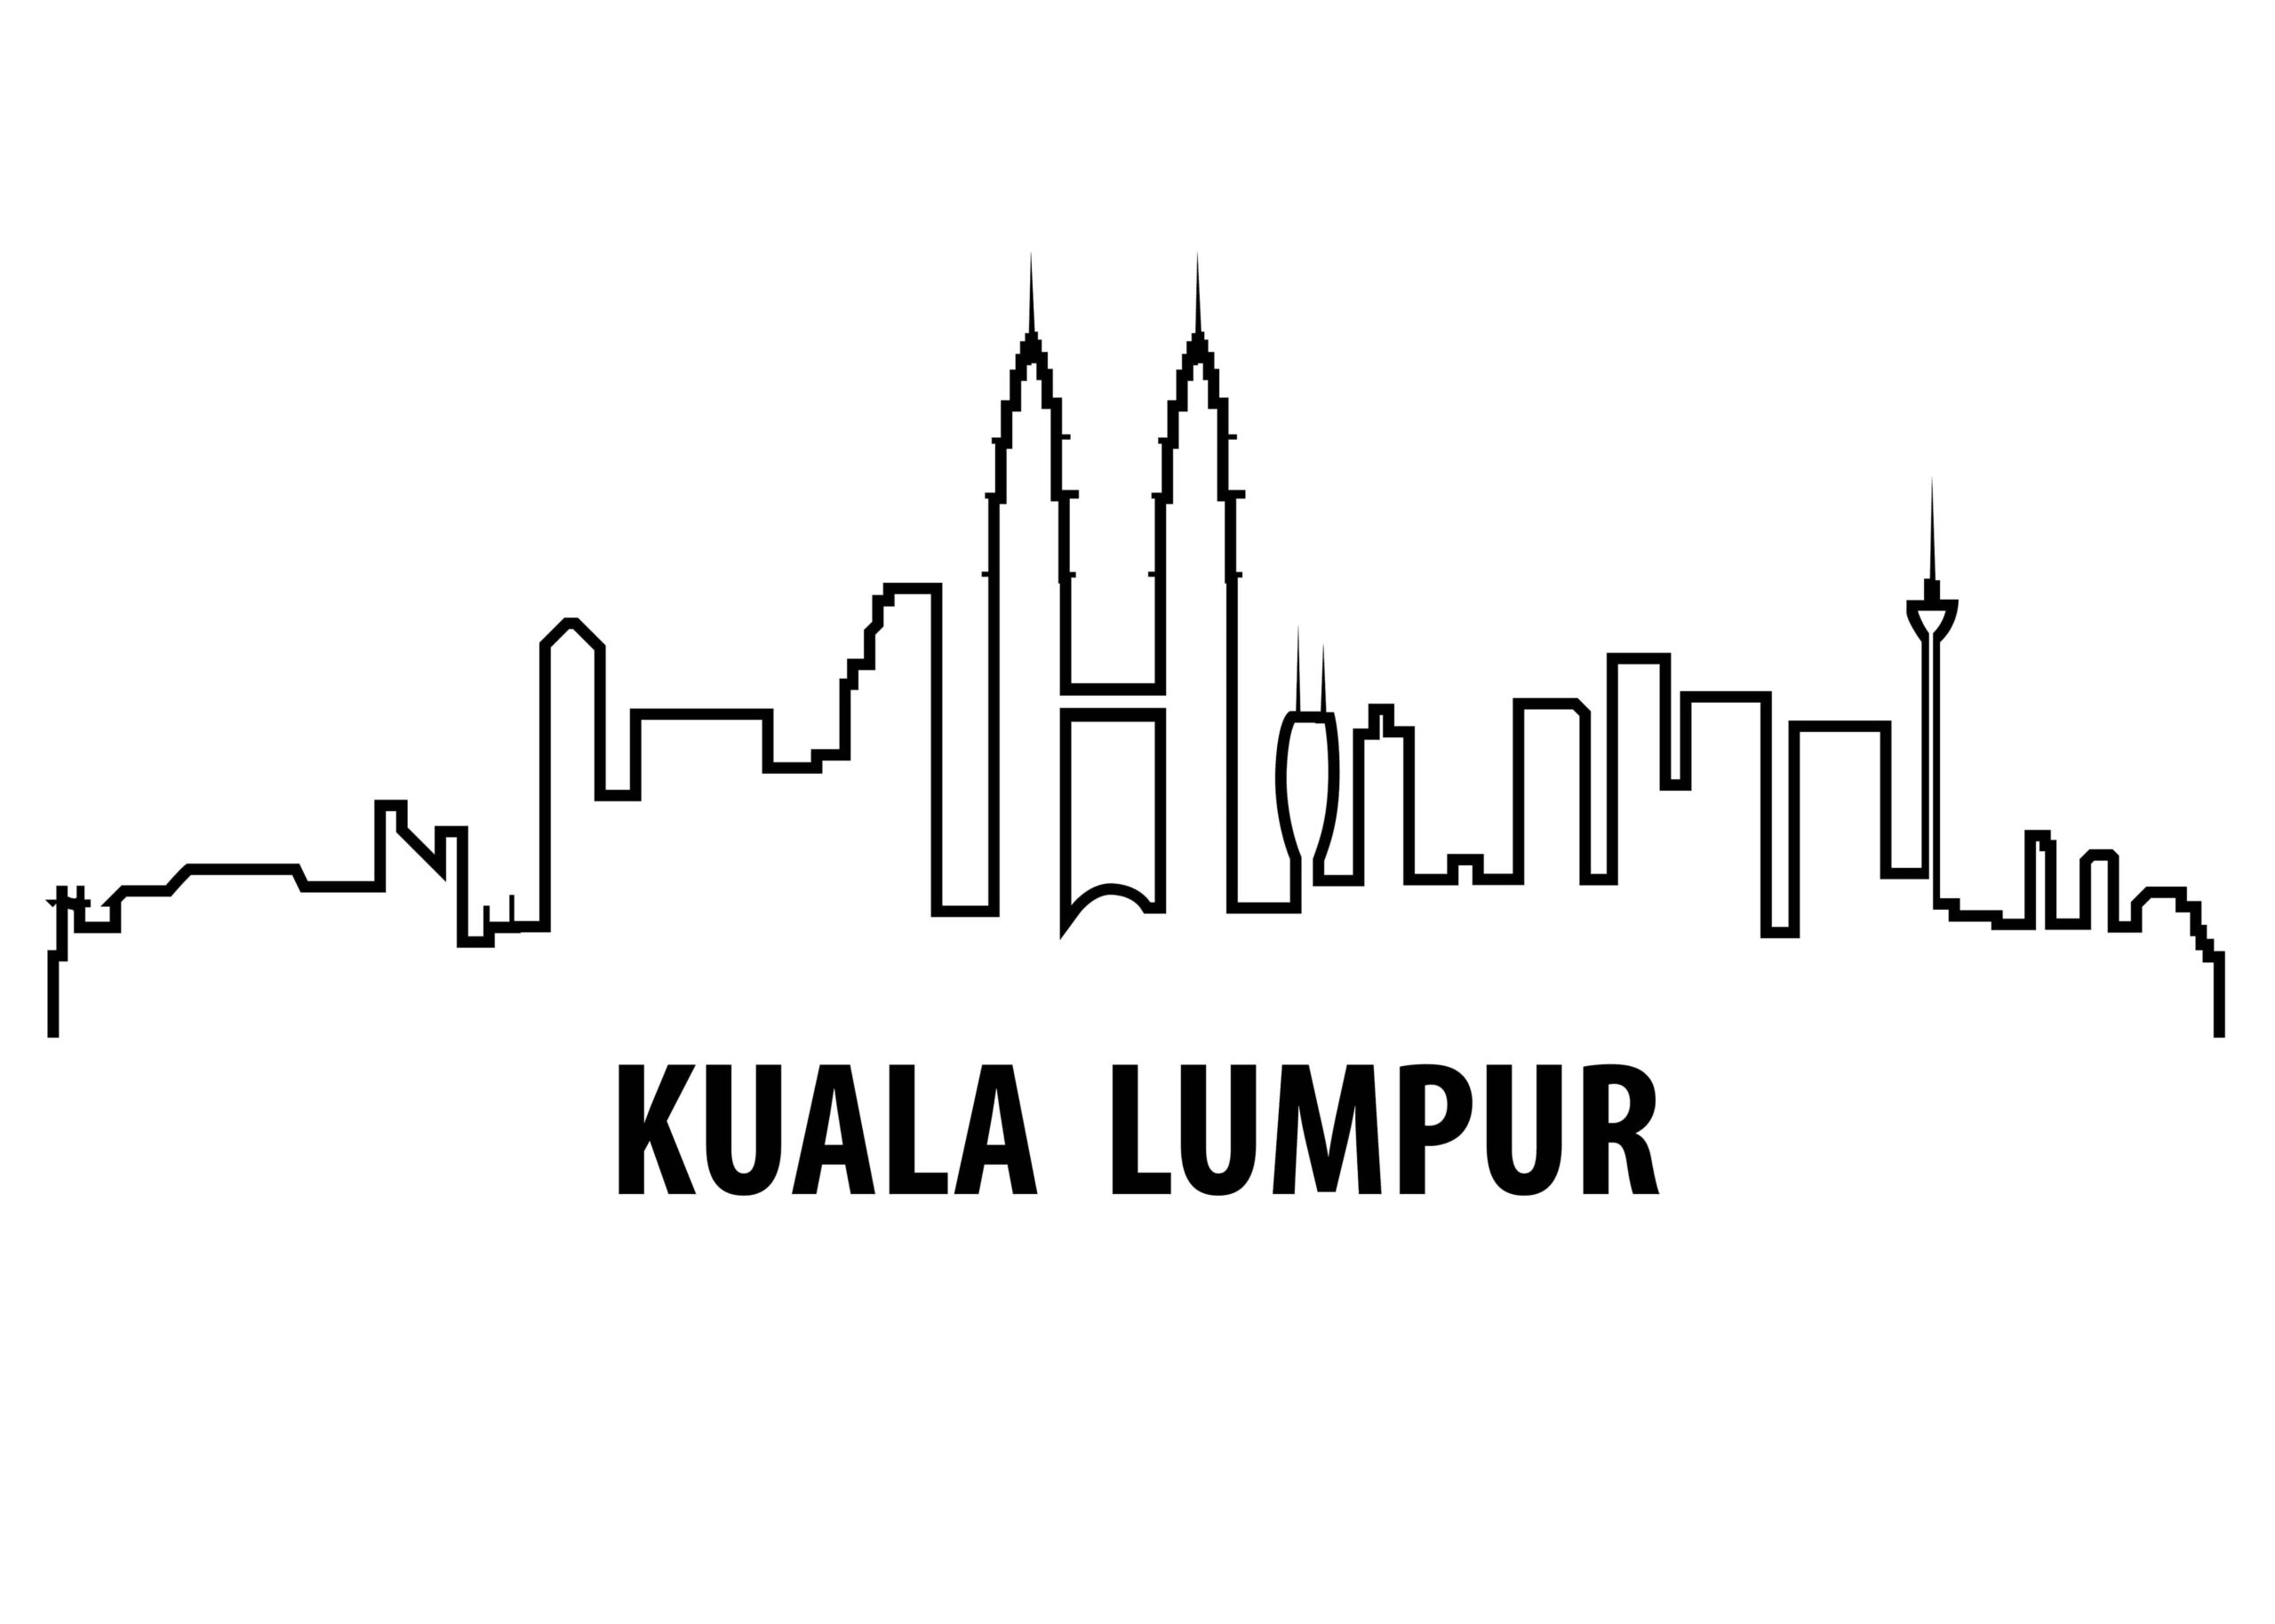 Kuala Lumpur skyline poster